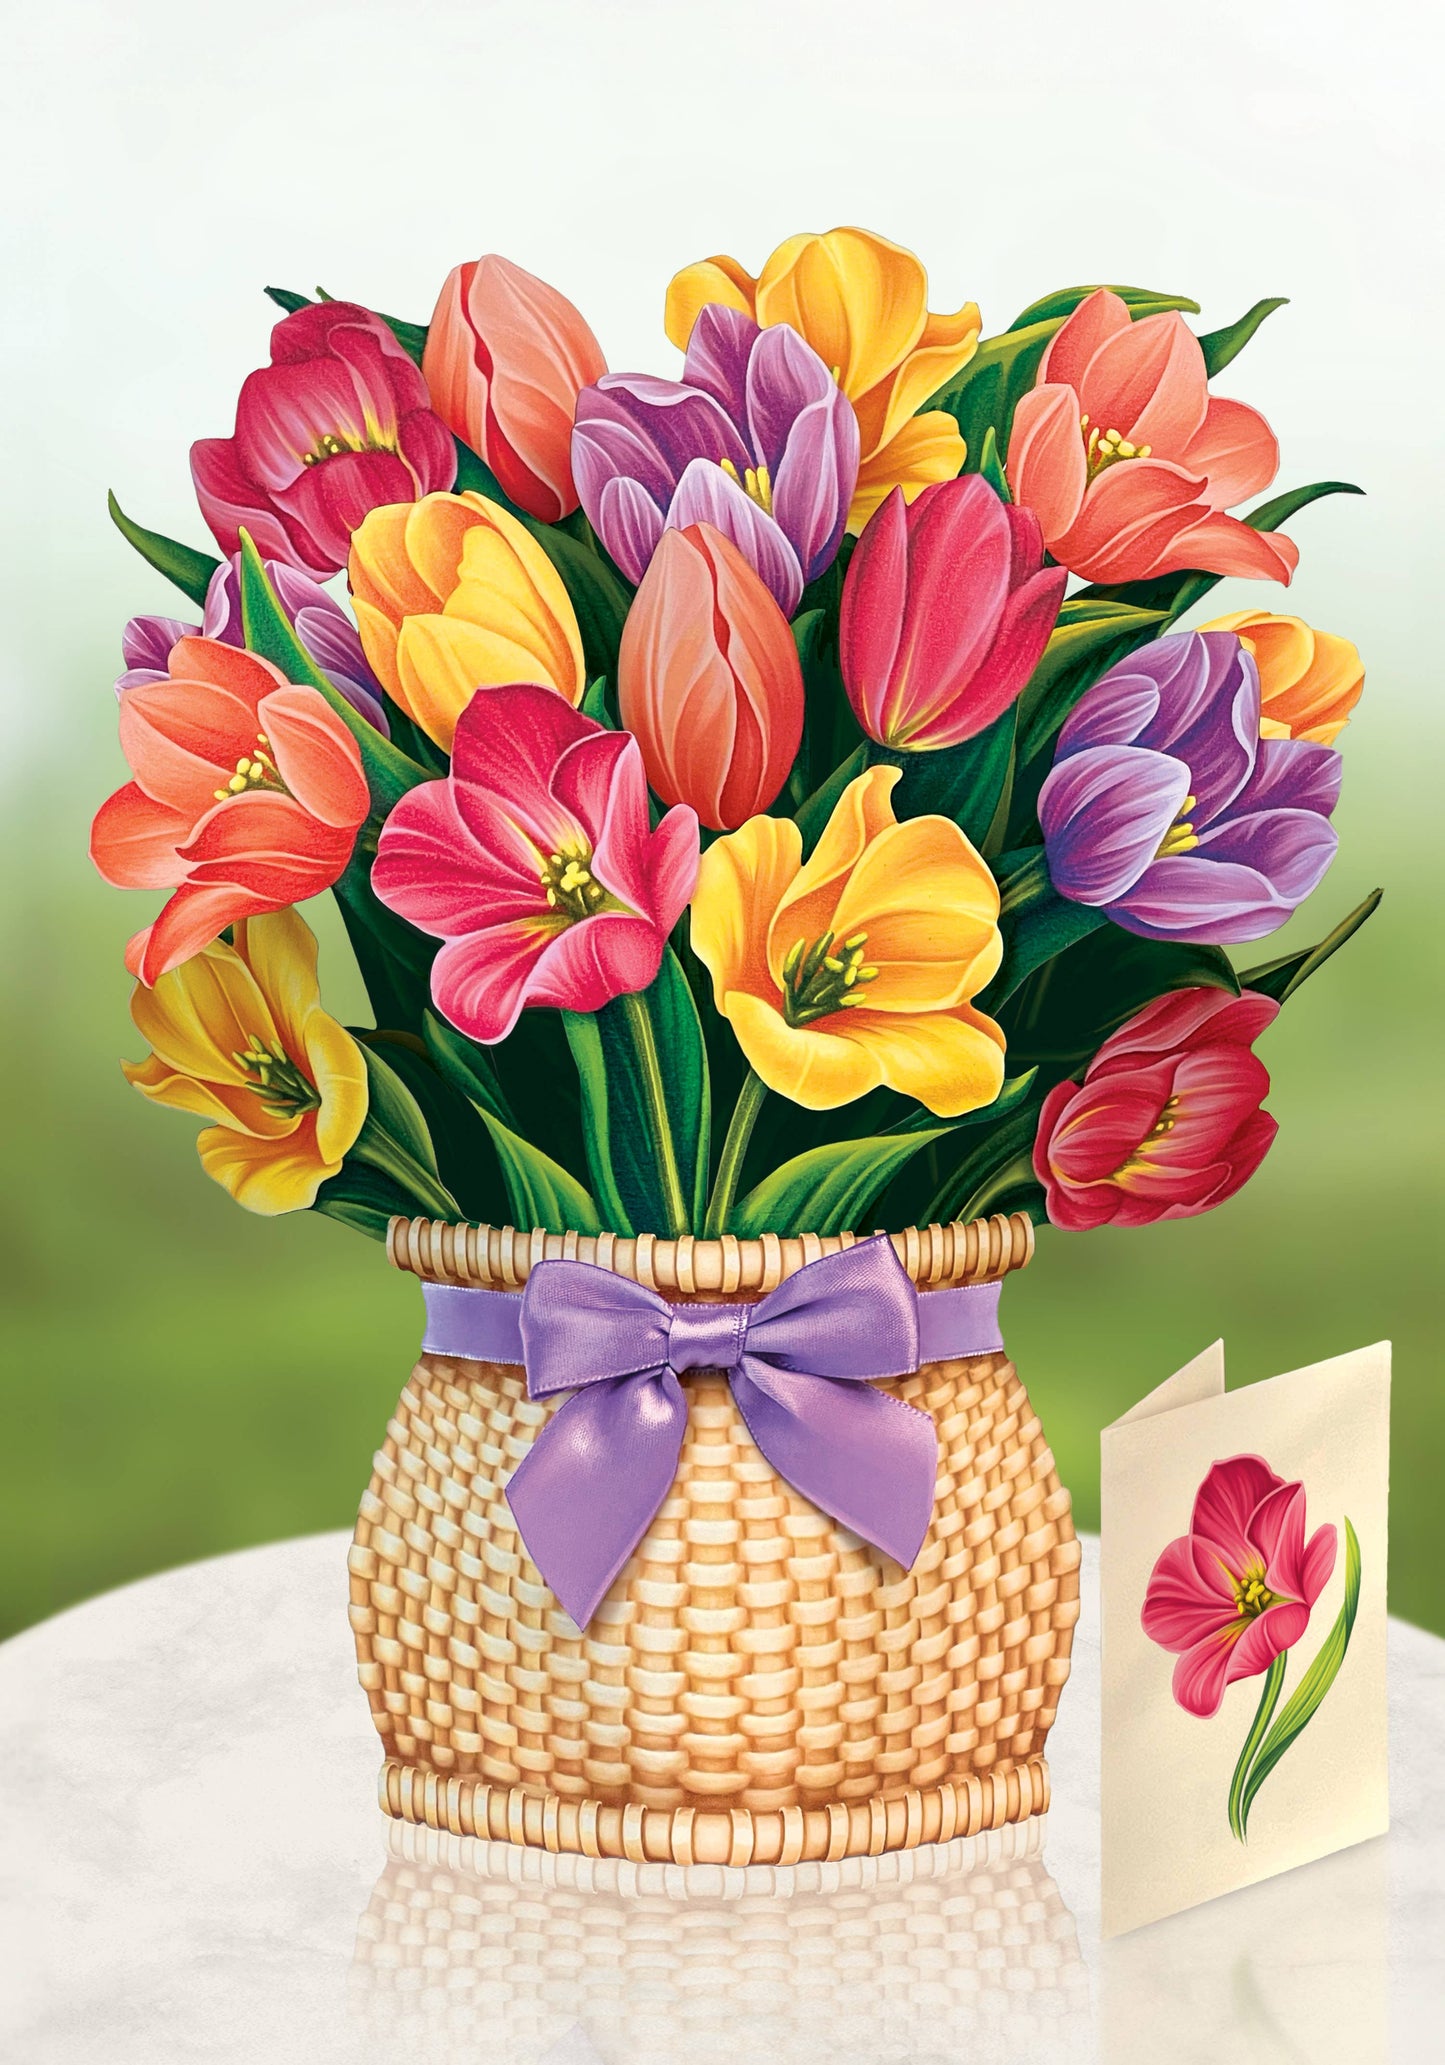 Festive Tulips Pop-Up Greeting Card